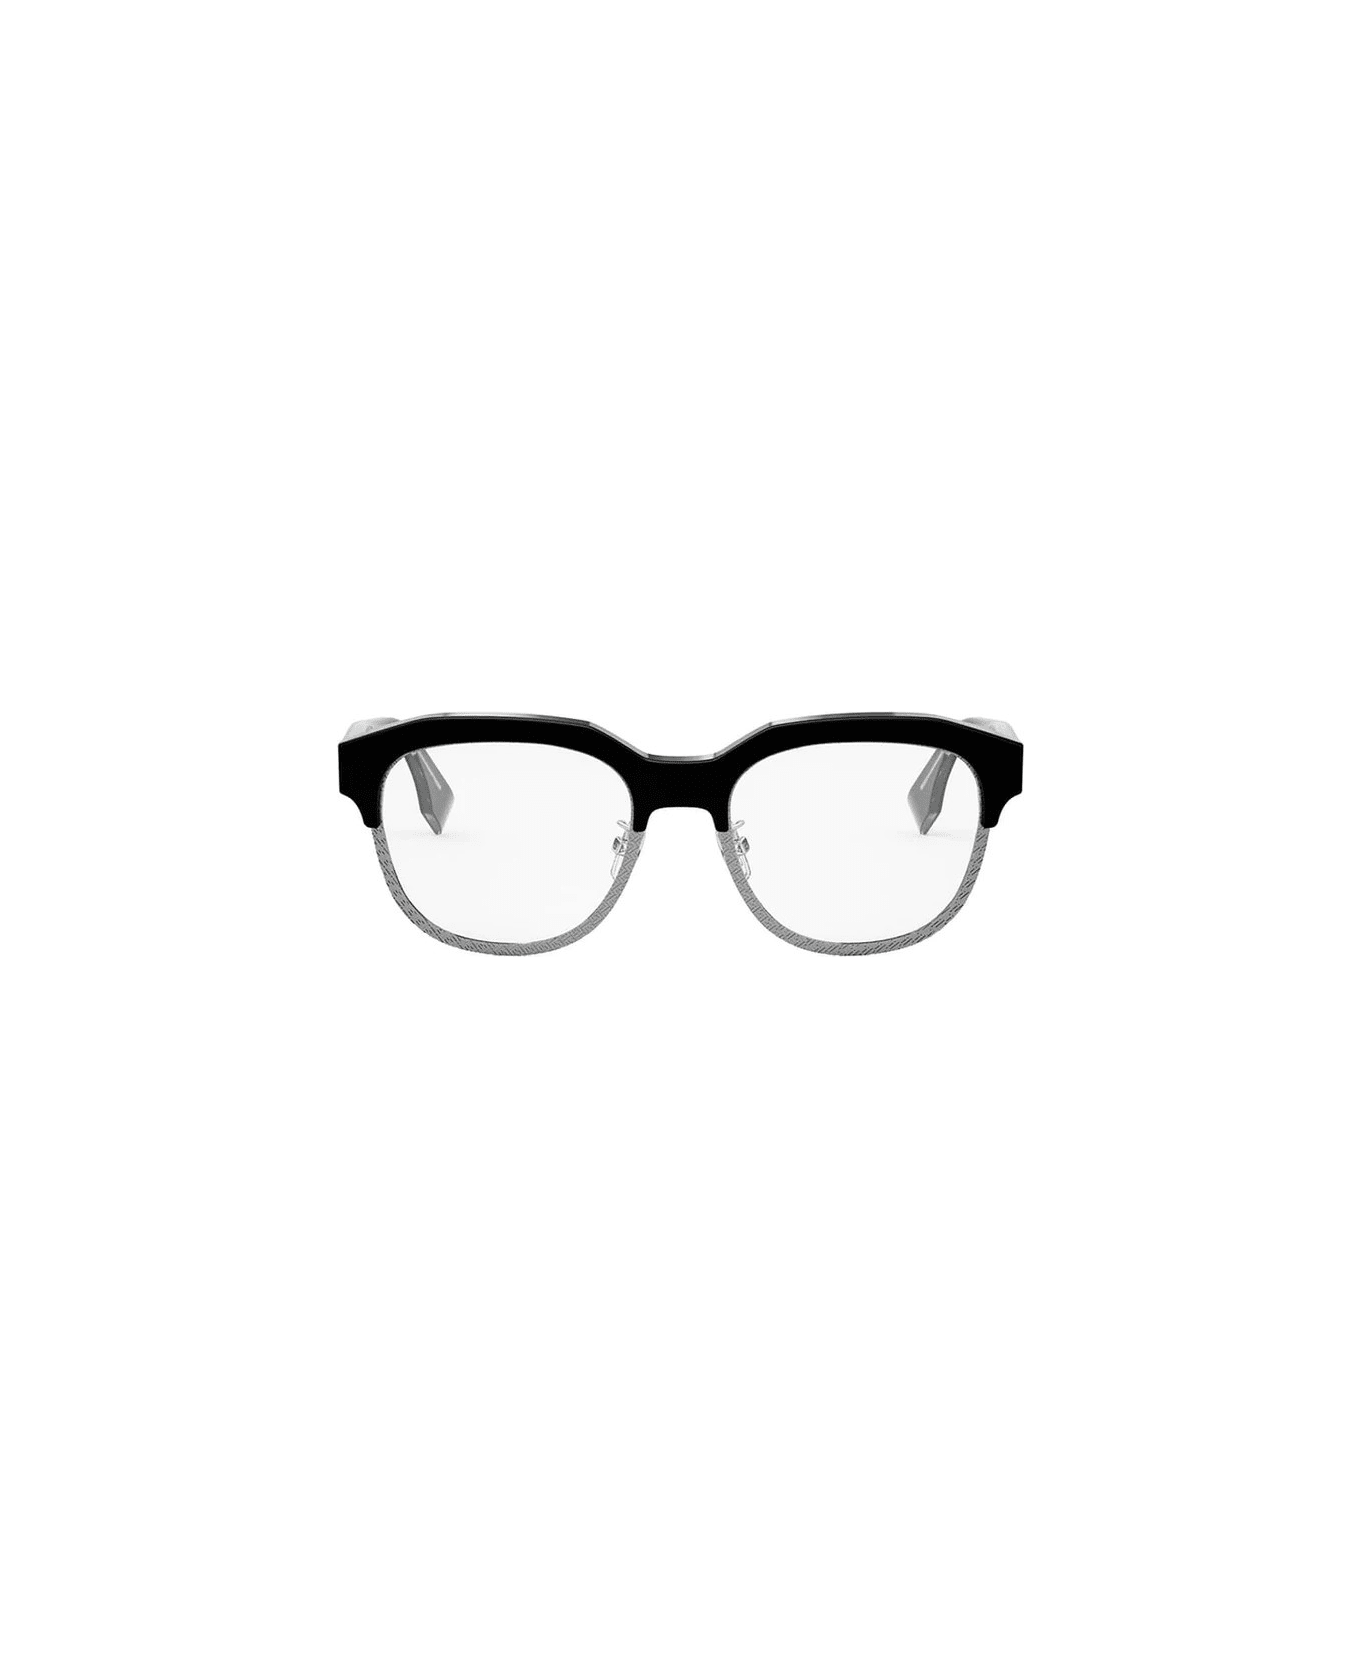 Fendi Eyewear FE50068u 001 Glasses